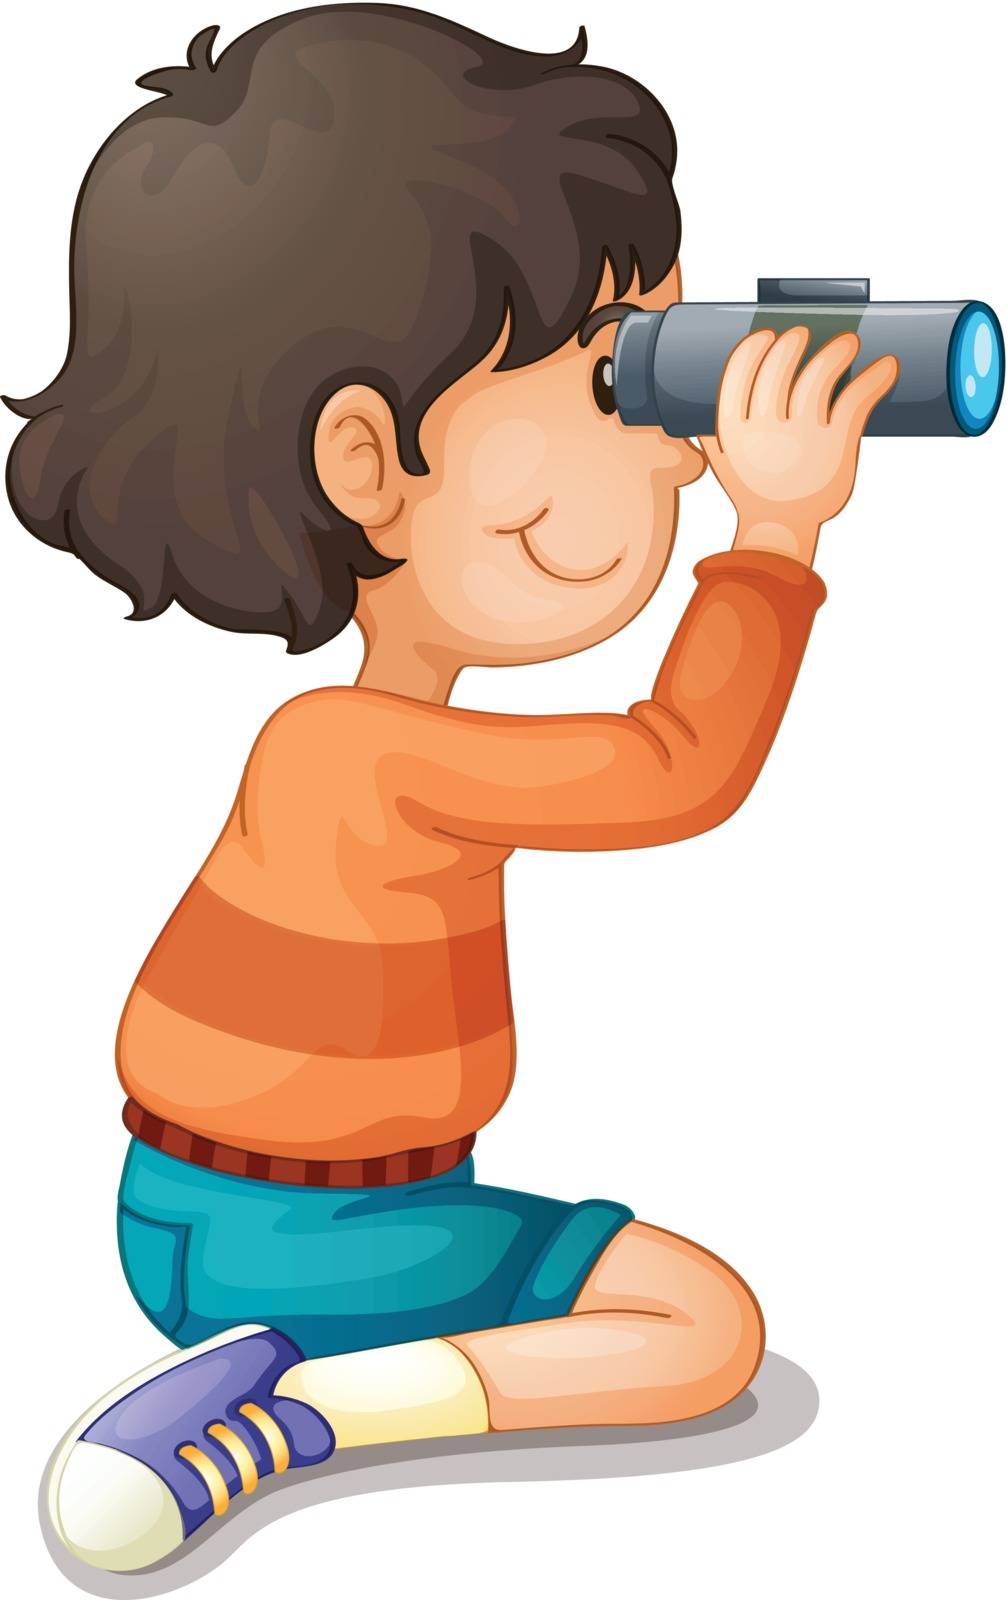 Illustration of a boy using binoculars